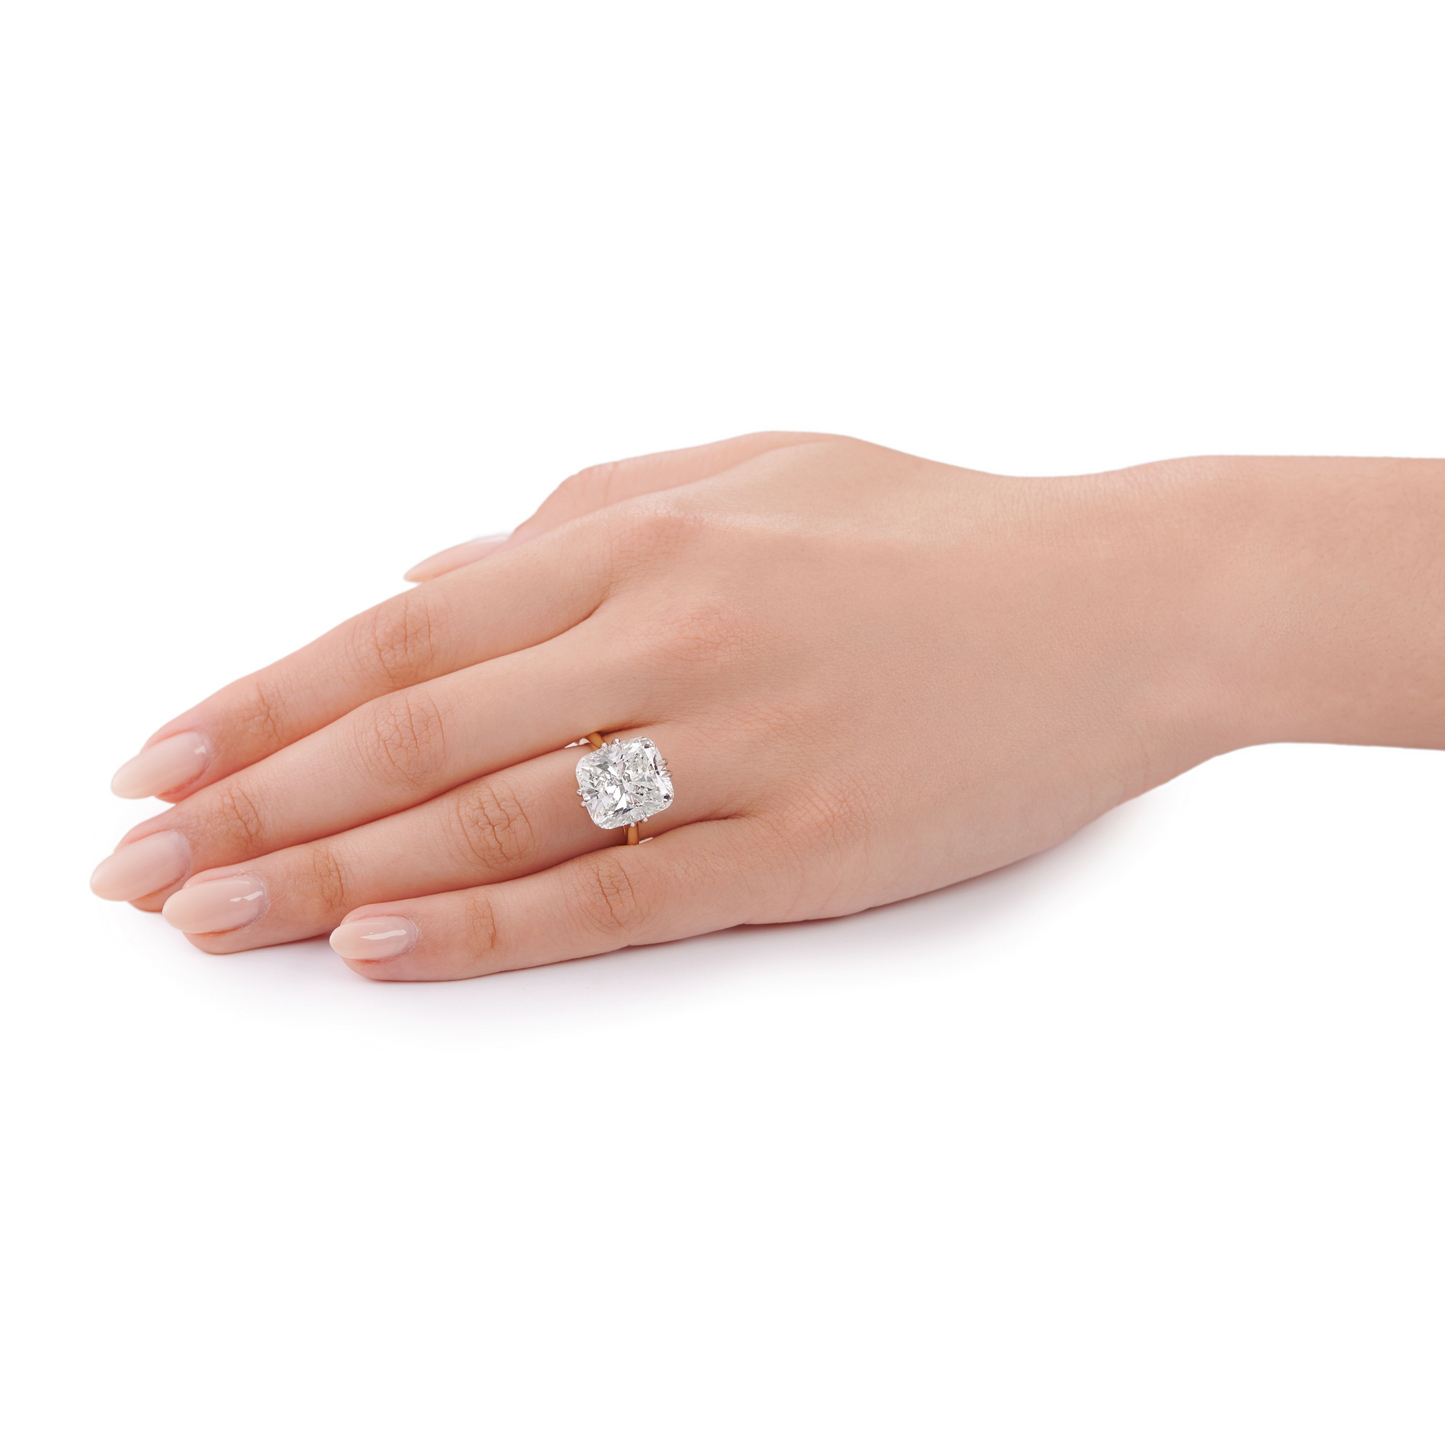 10.32cts Cushion-Cut Diamond Solitaire Ring